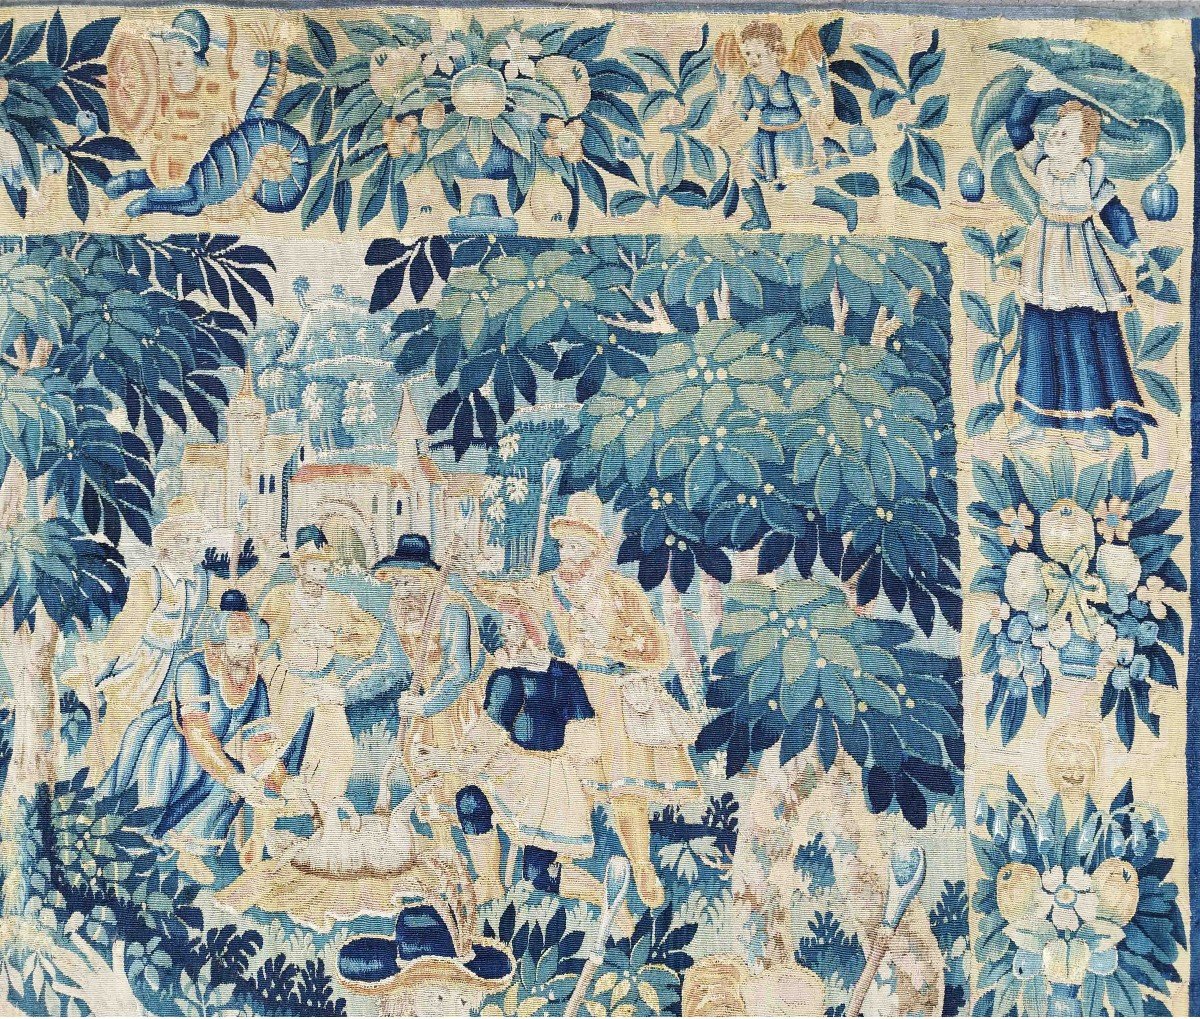 Beautiful Oudenaarde Flanders 17th Century Tapestry - Scene Of Offering To The King - 3m30x2m40, N° 1232-photo-3